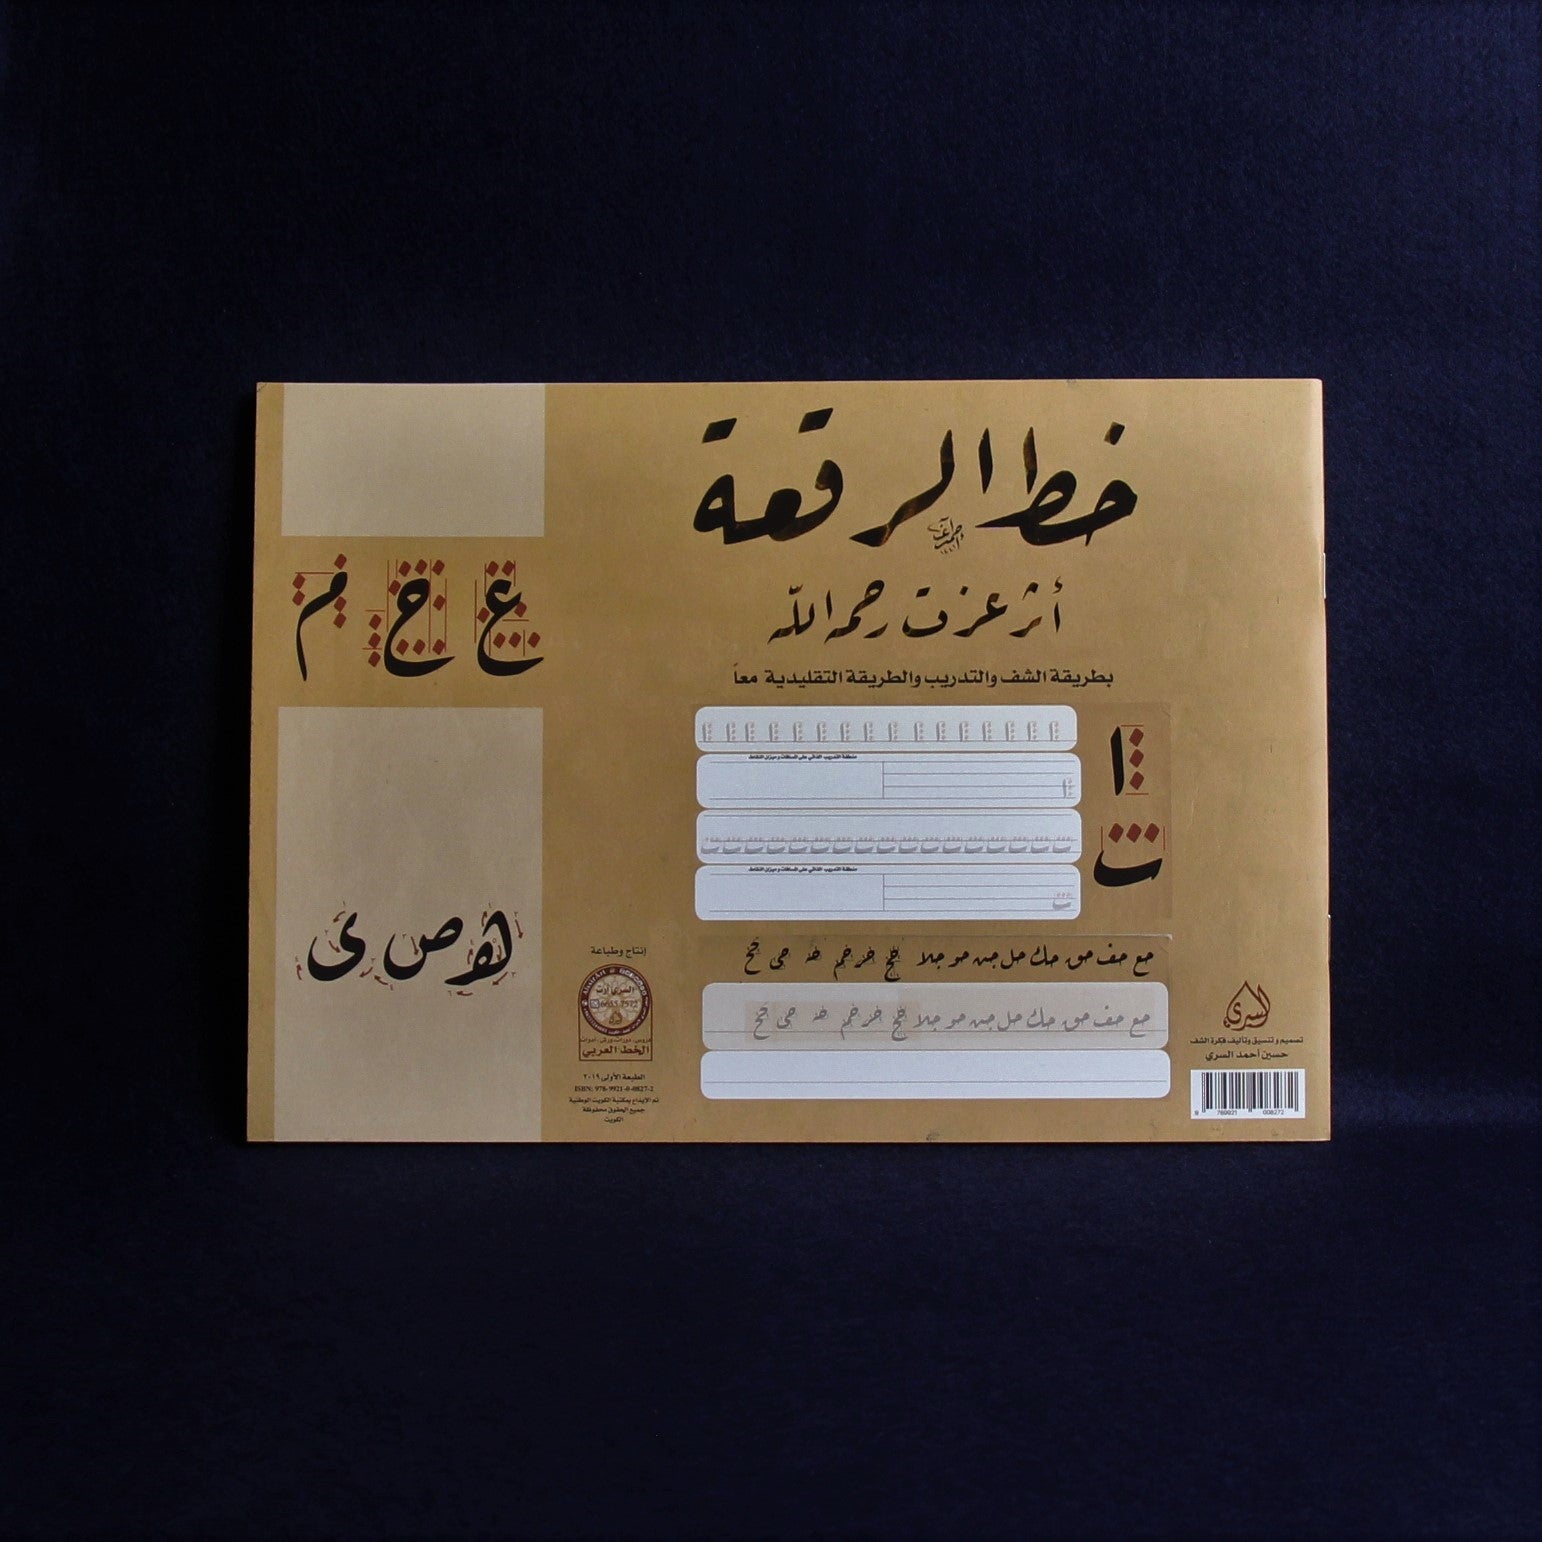 Arabic calligraphy workbook for Ruq'a script based on work of Izzet Efendi